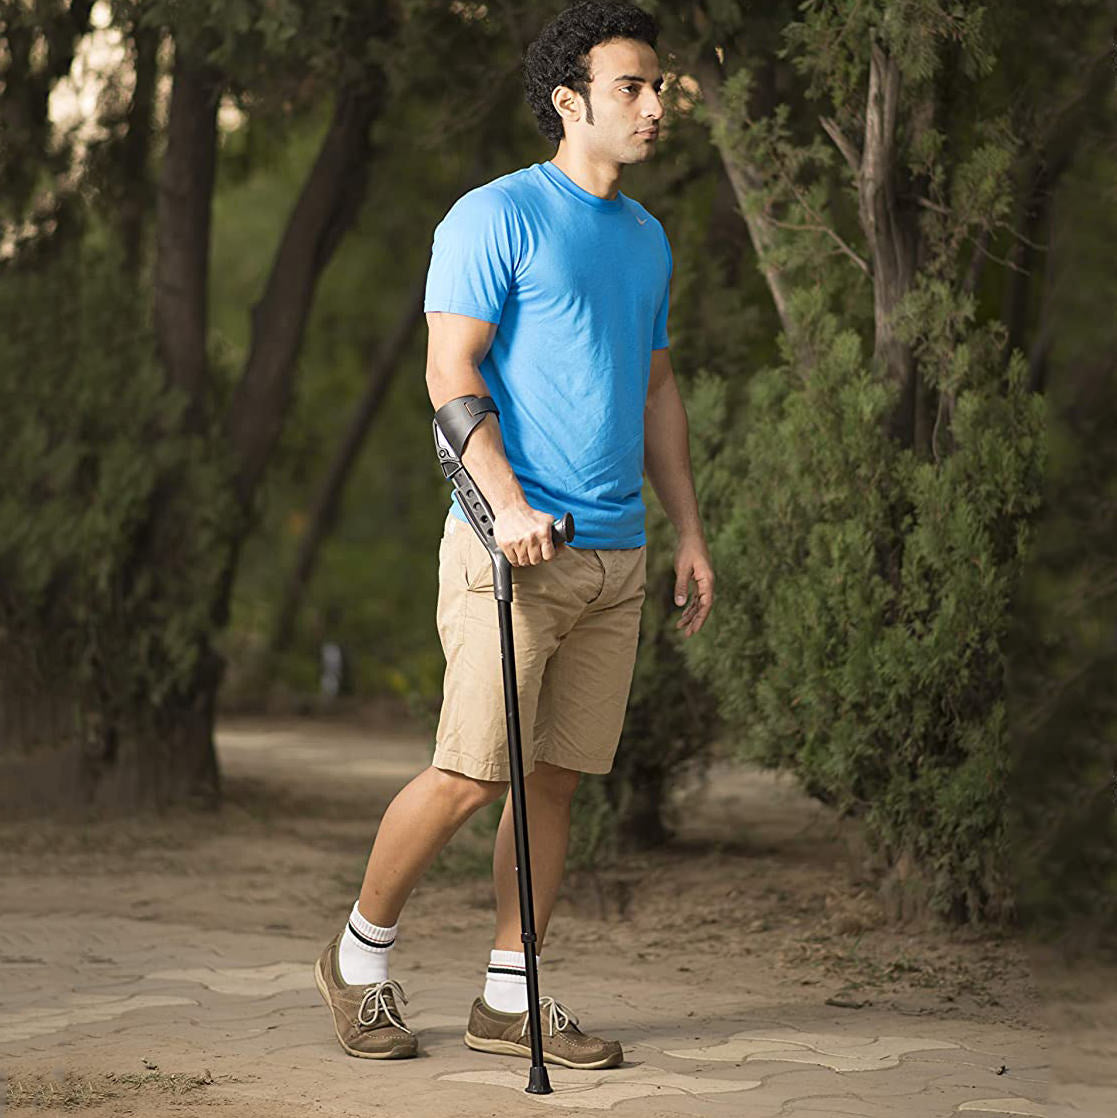 Adjustable Elbow Crutches-10